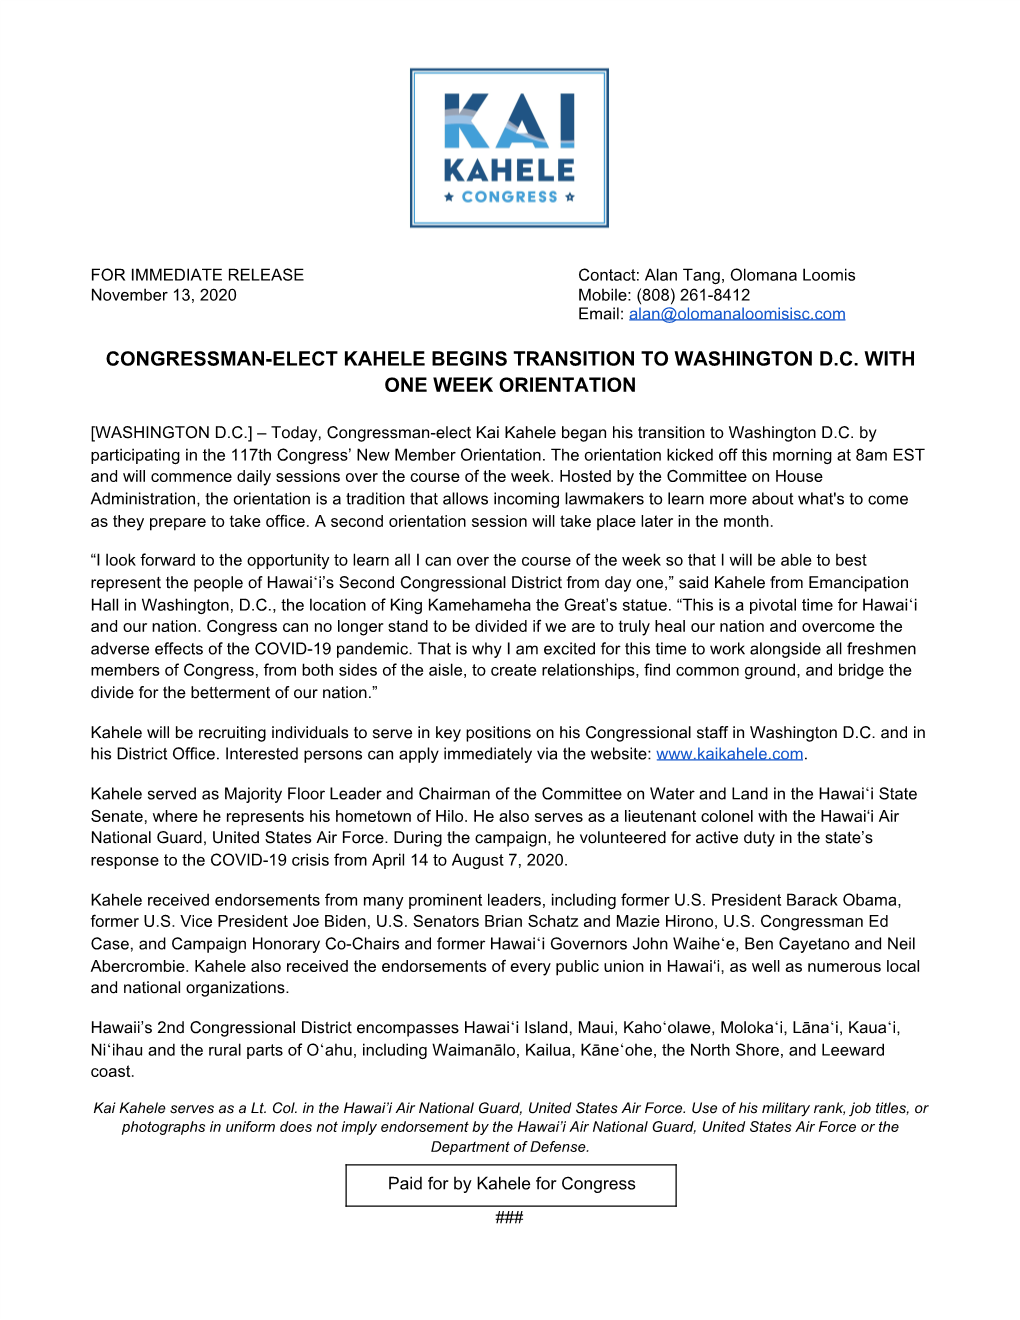 Congressman-Elect Kahele Begins Transition to Washington D.C